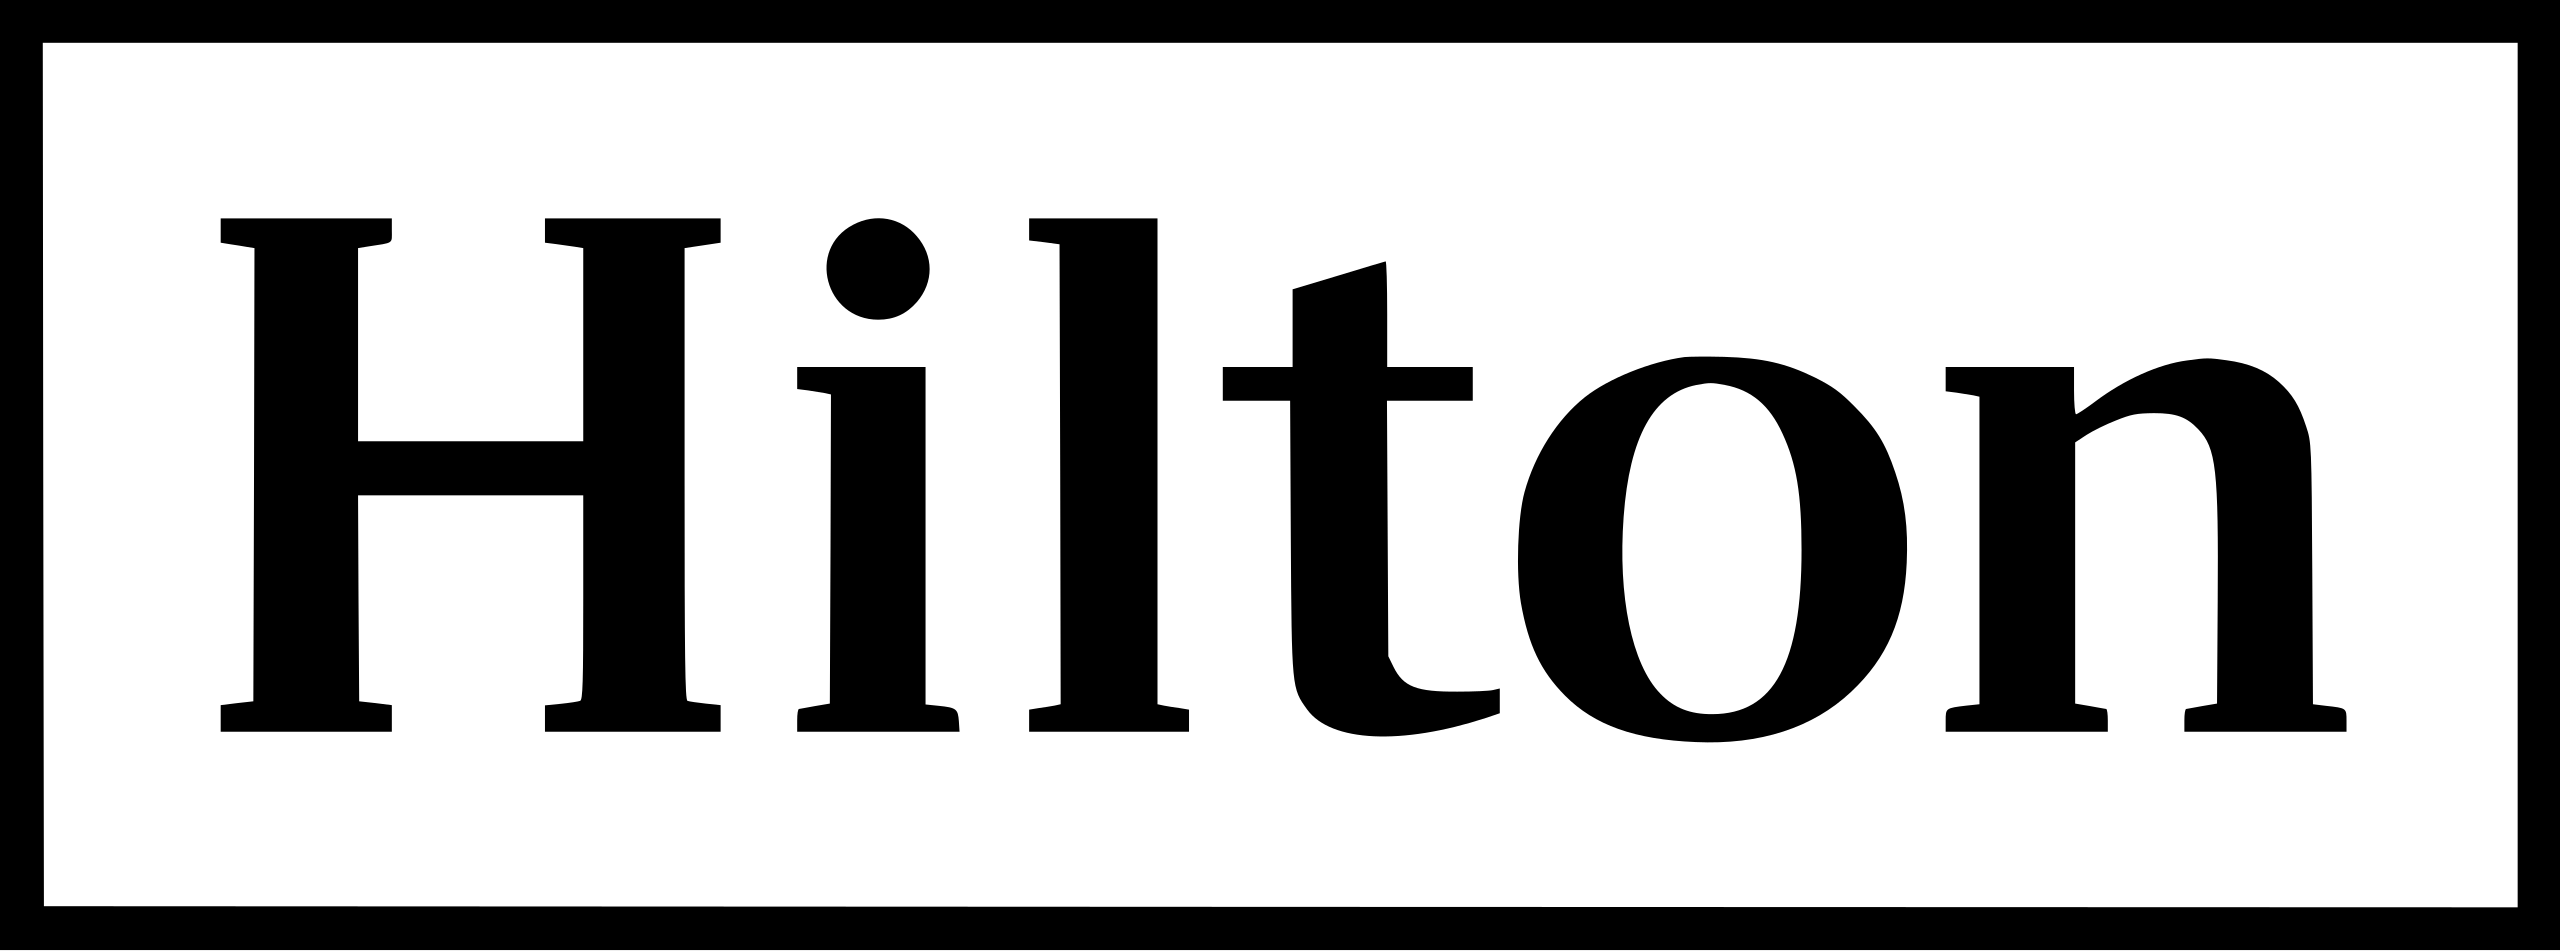 2560px-Hilton Worldwide logo.svg